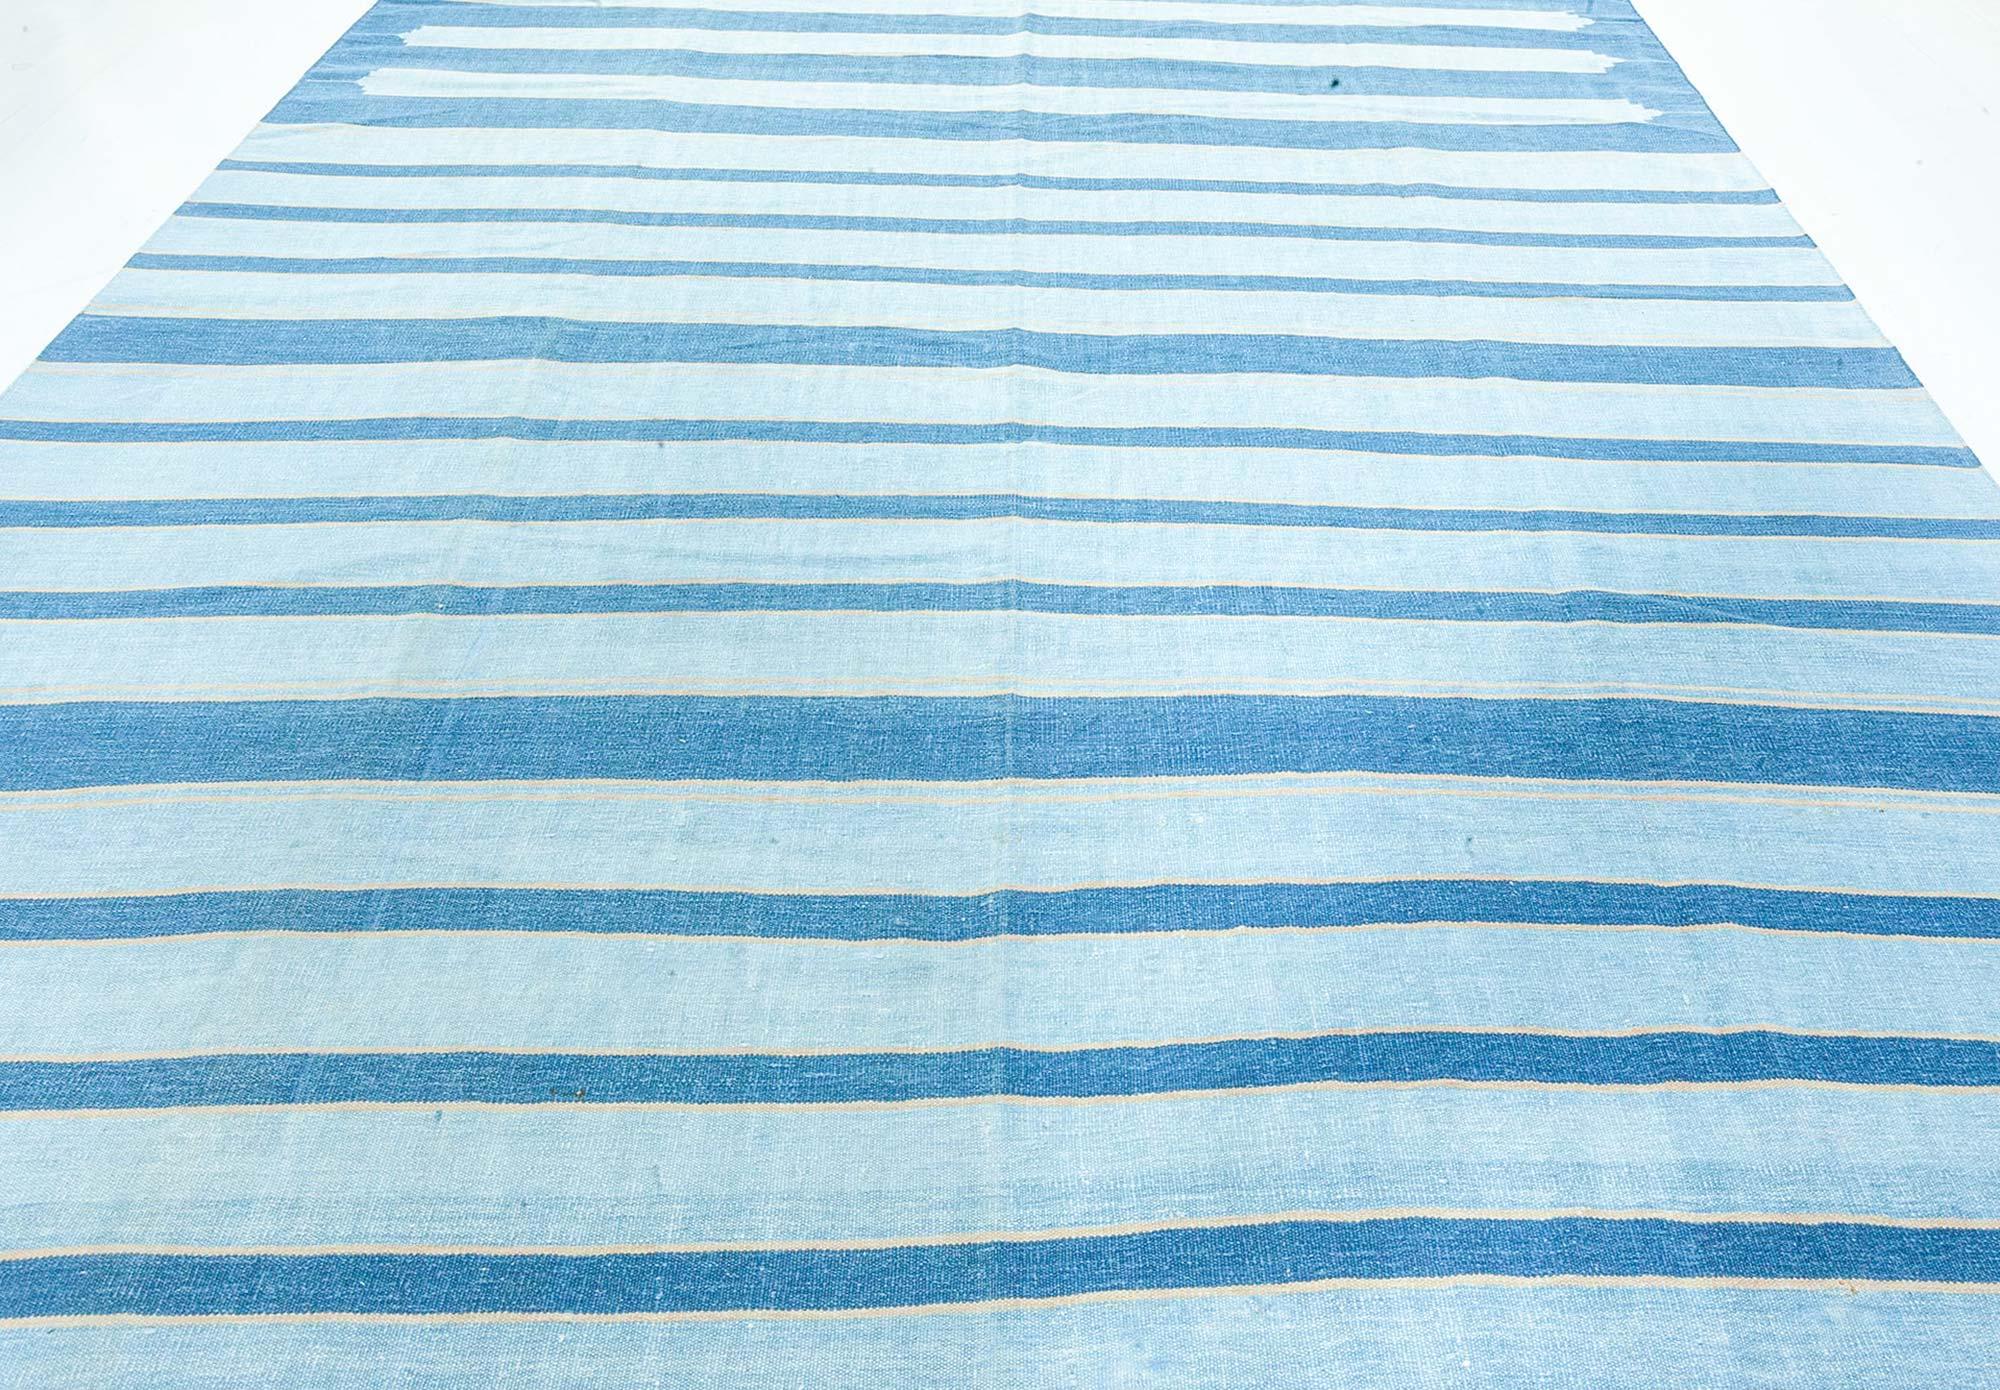 Vintage Indian Dhurrie Striped Blue rug by Doris Leslie Blau
Size: 6'5